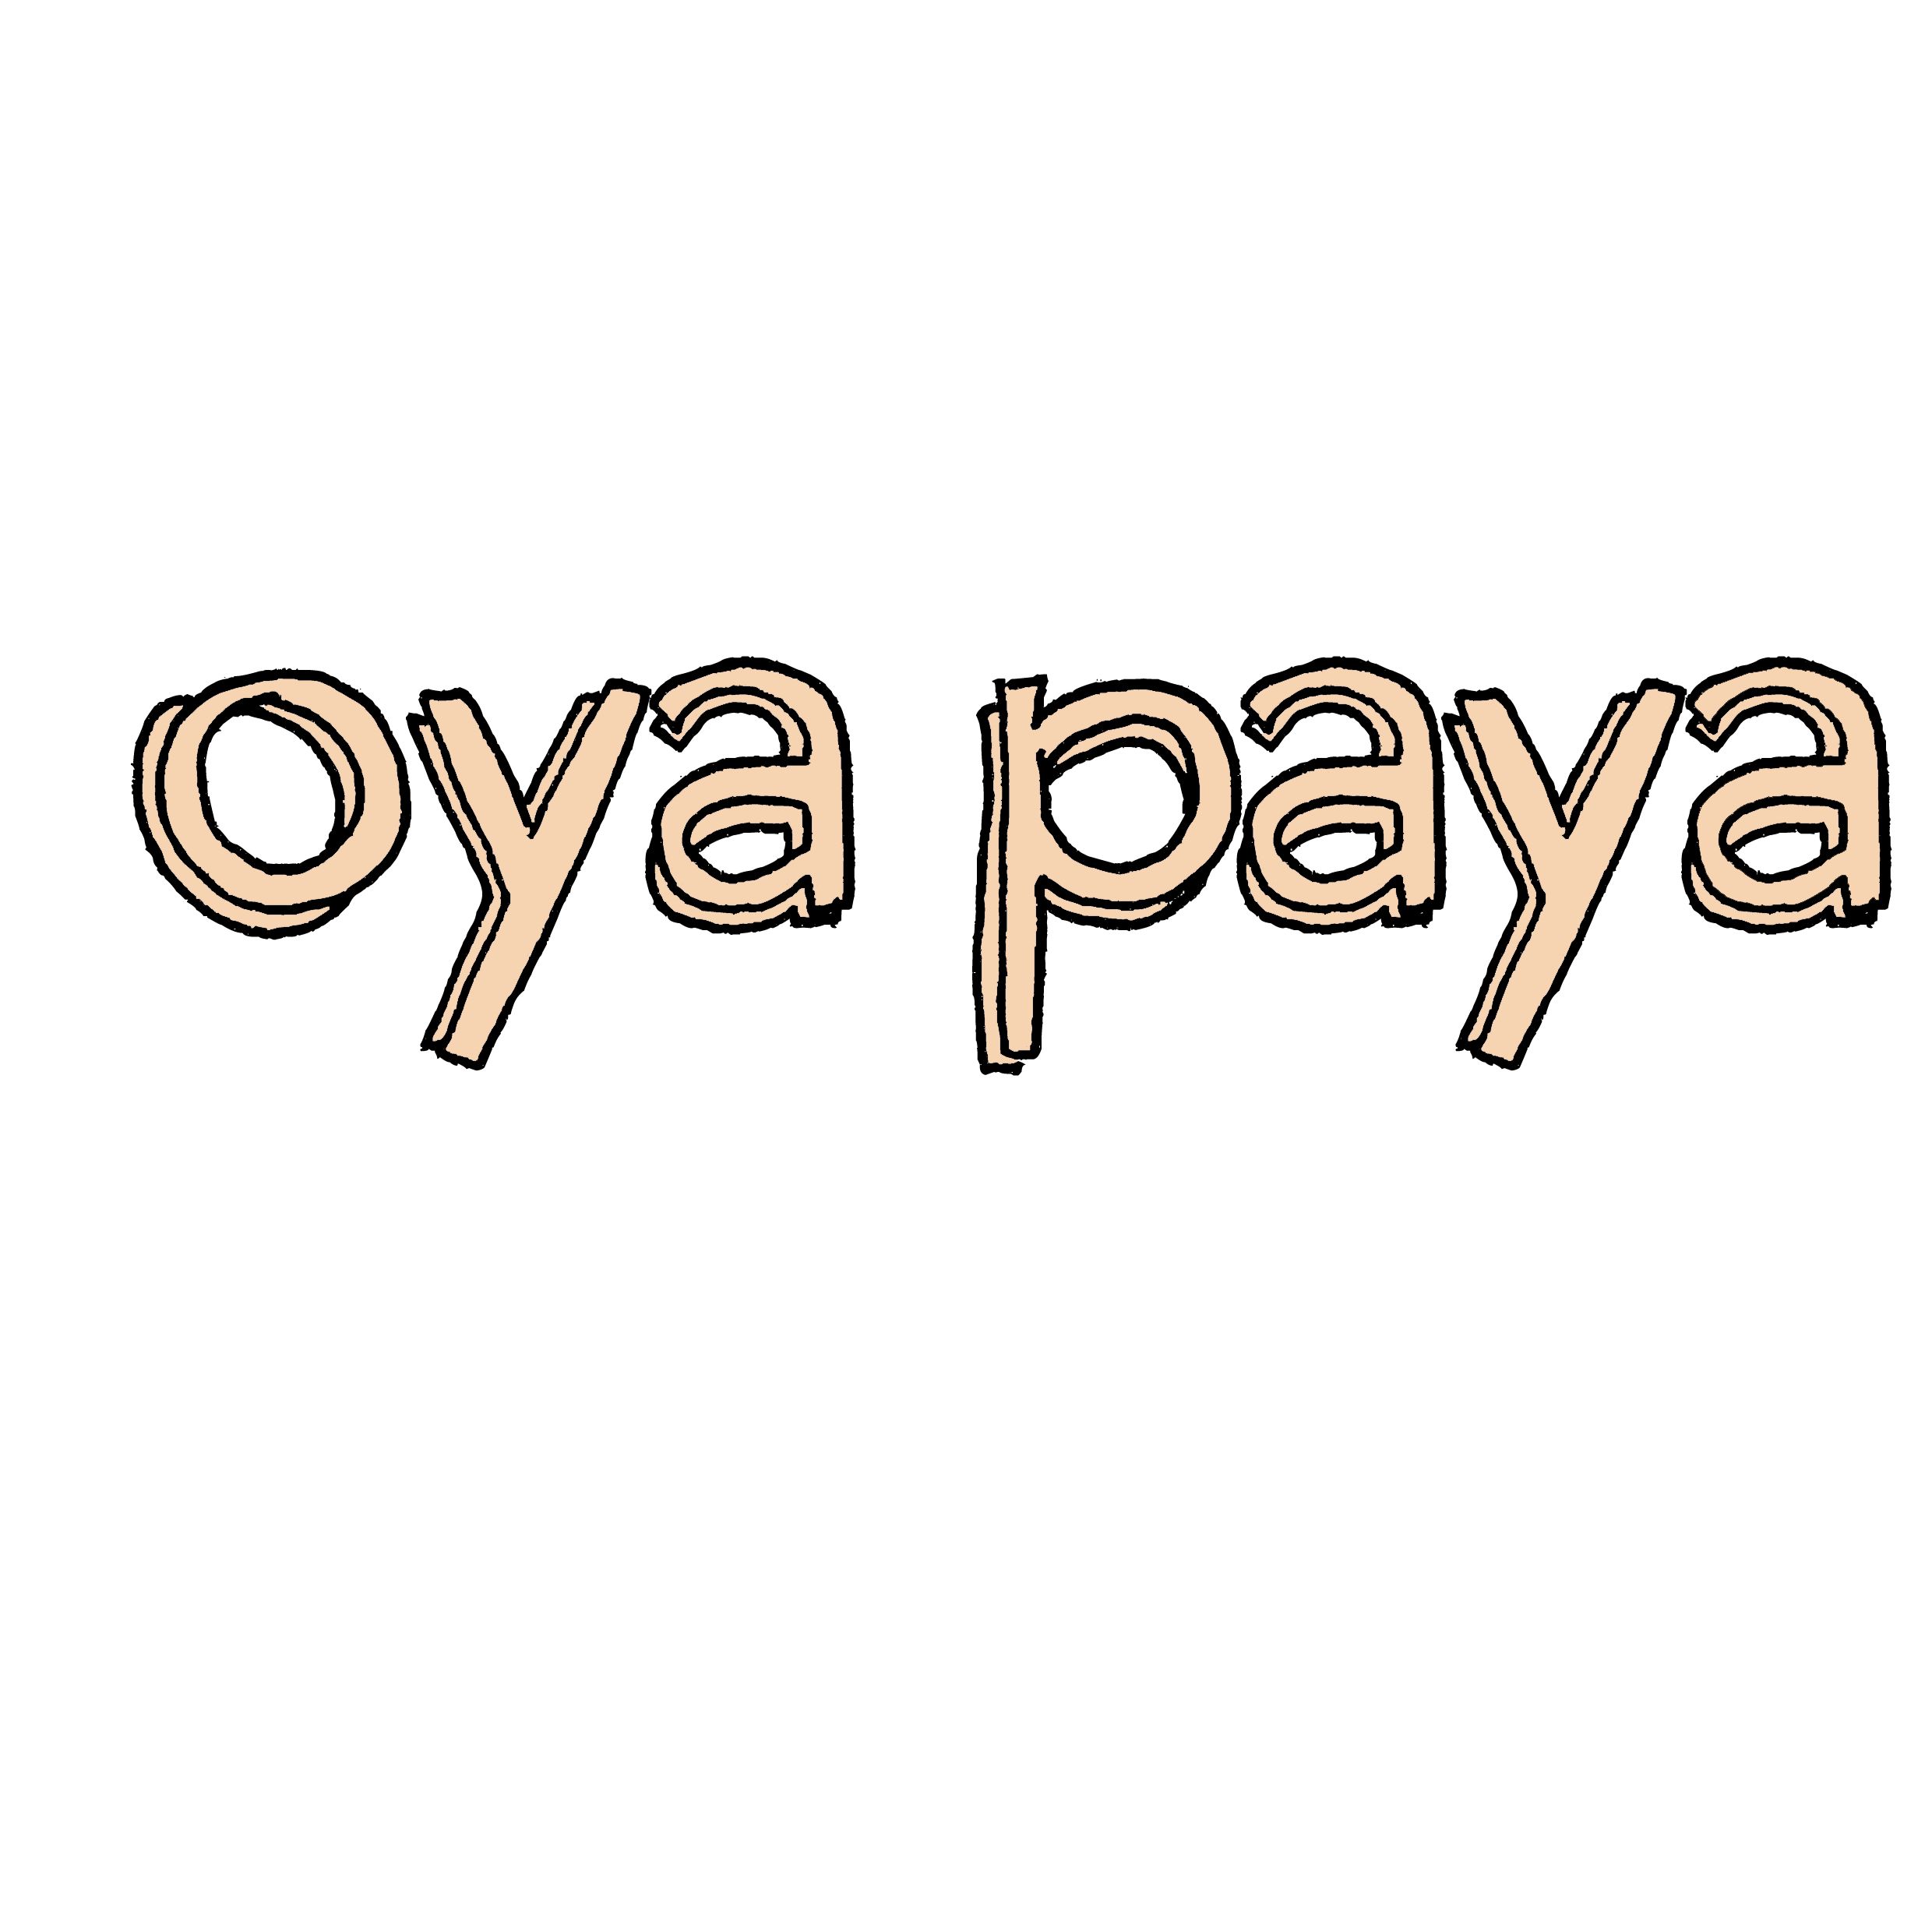 Oya Paya – “Just Around The Bend”